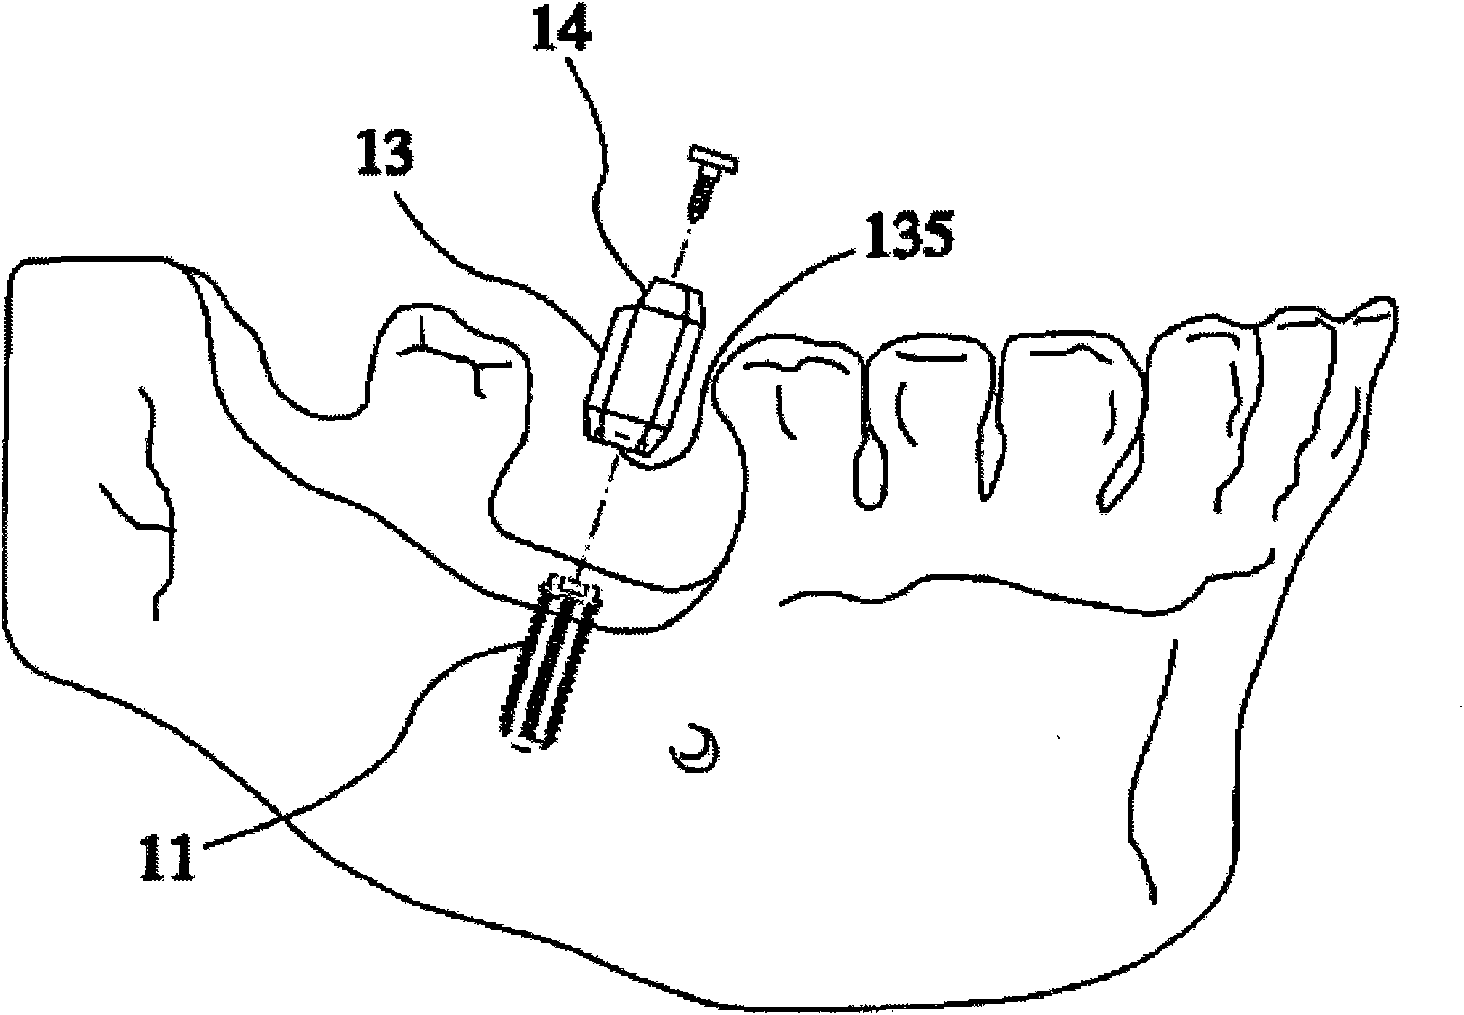 Method for designing implant prosthesis